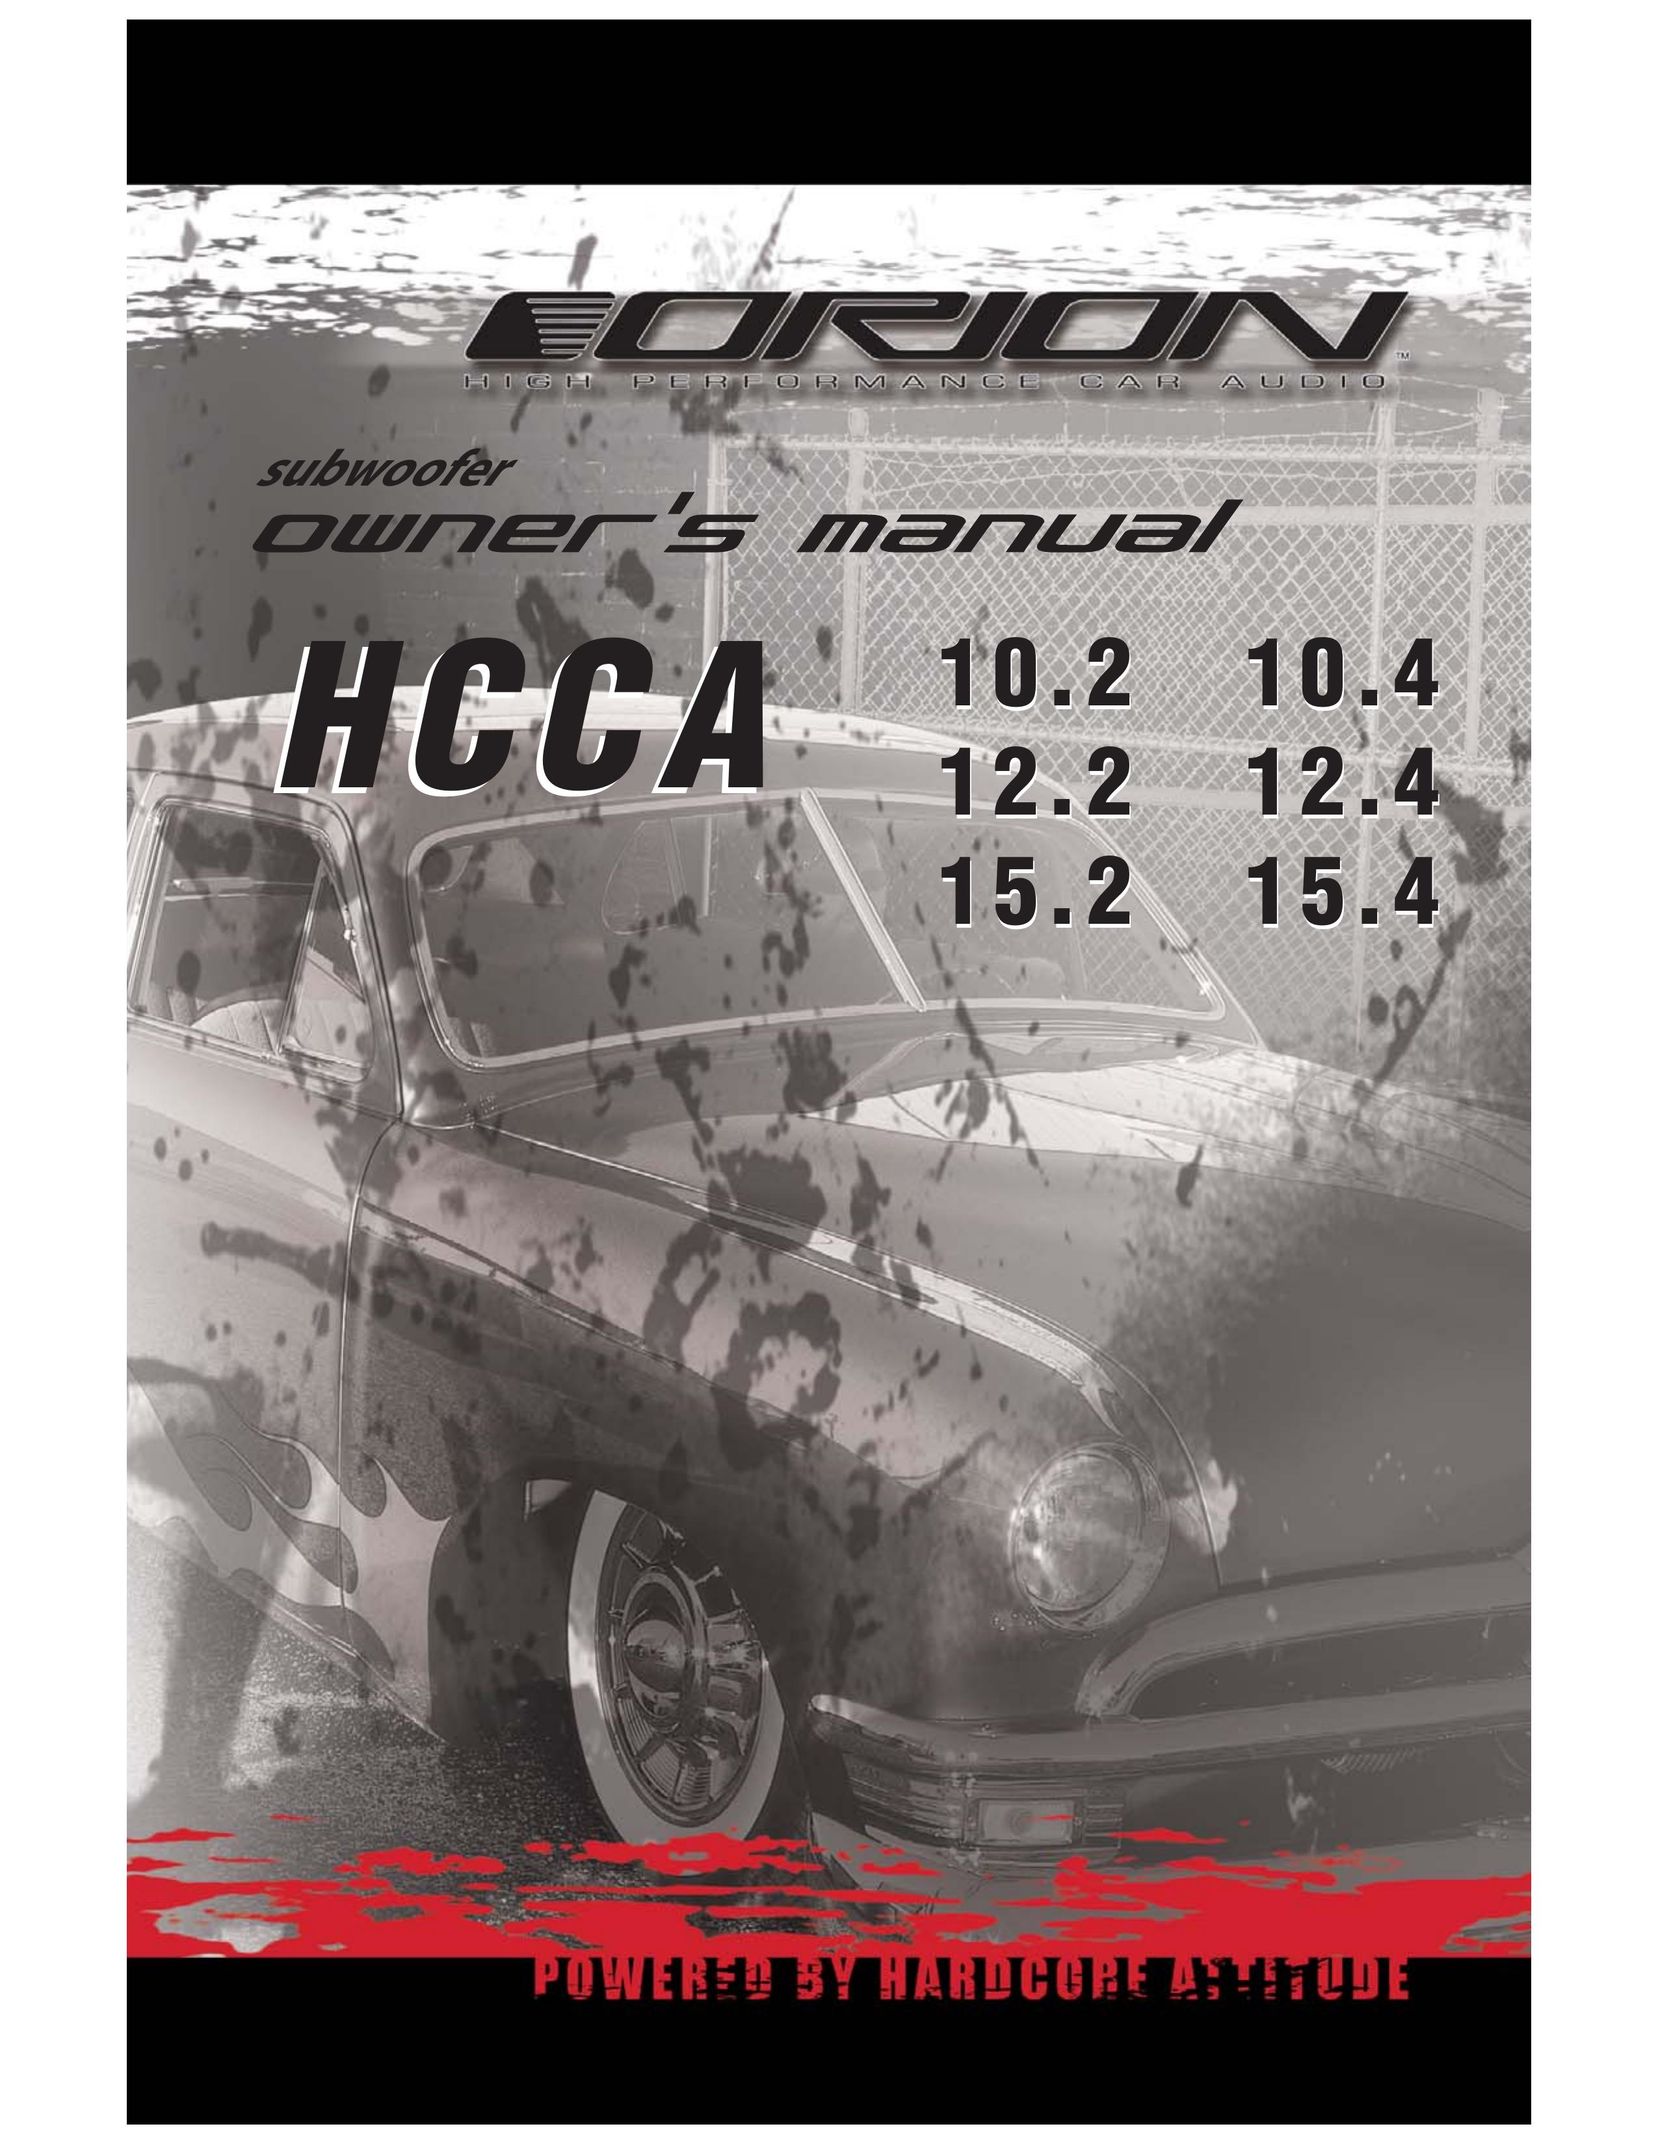 Orion Car Audio HCCA 12.4 Speaker User Manual